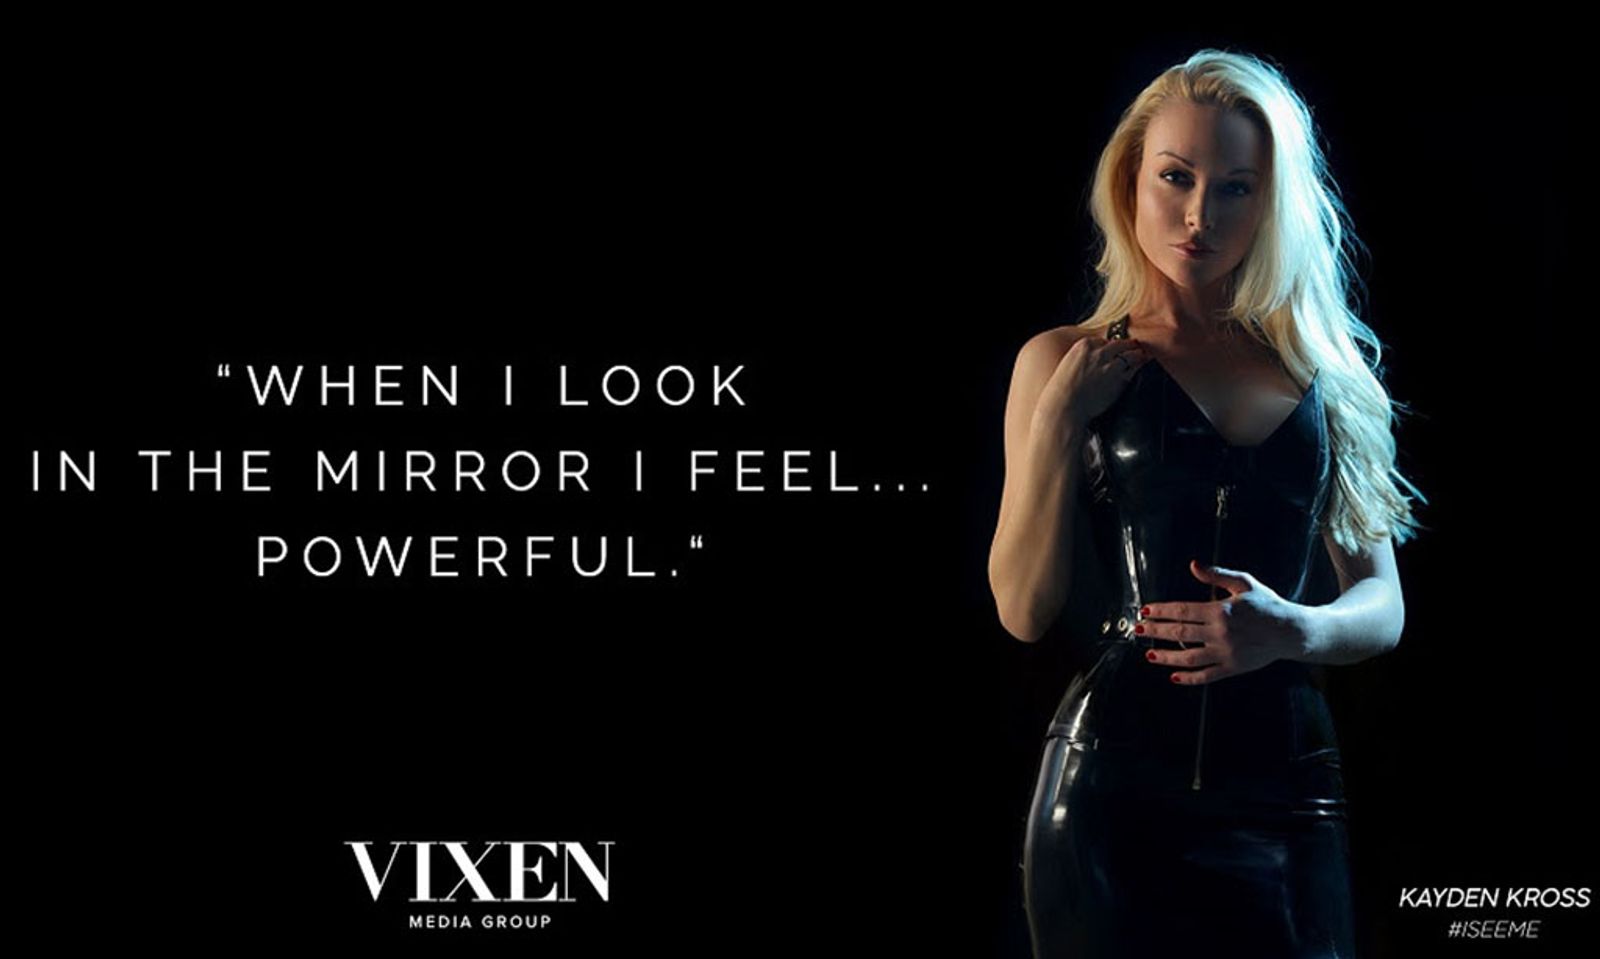 Vixen Media Group Launches Female Empowerment Campaign